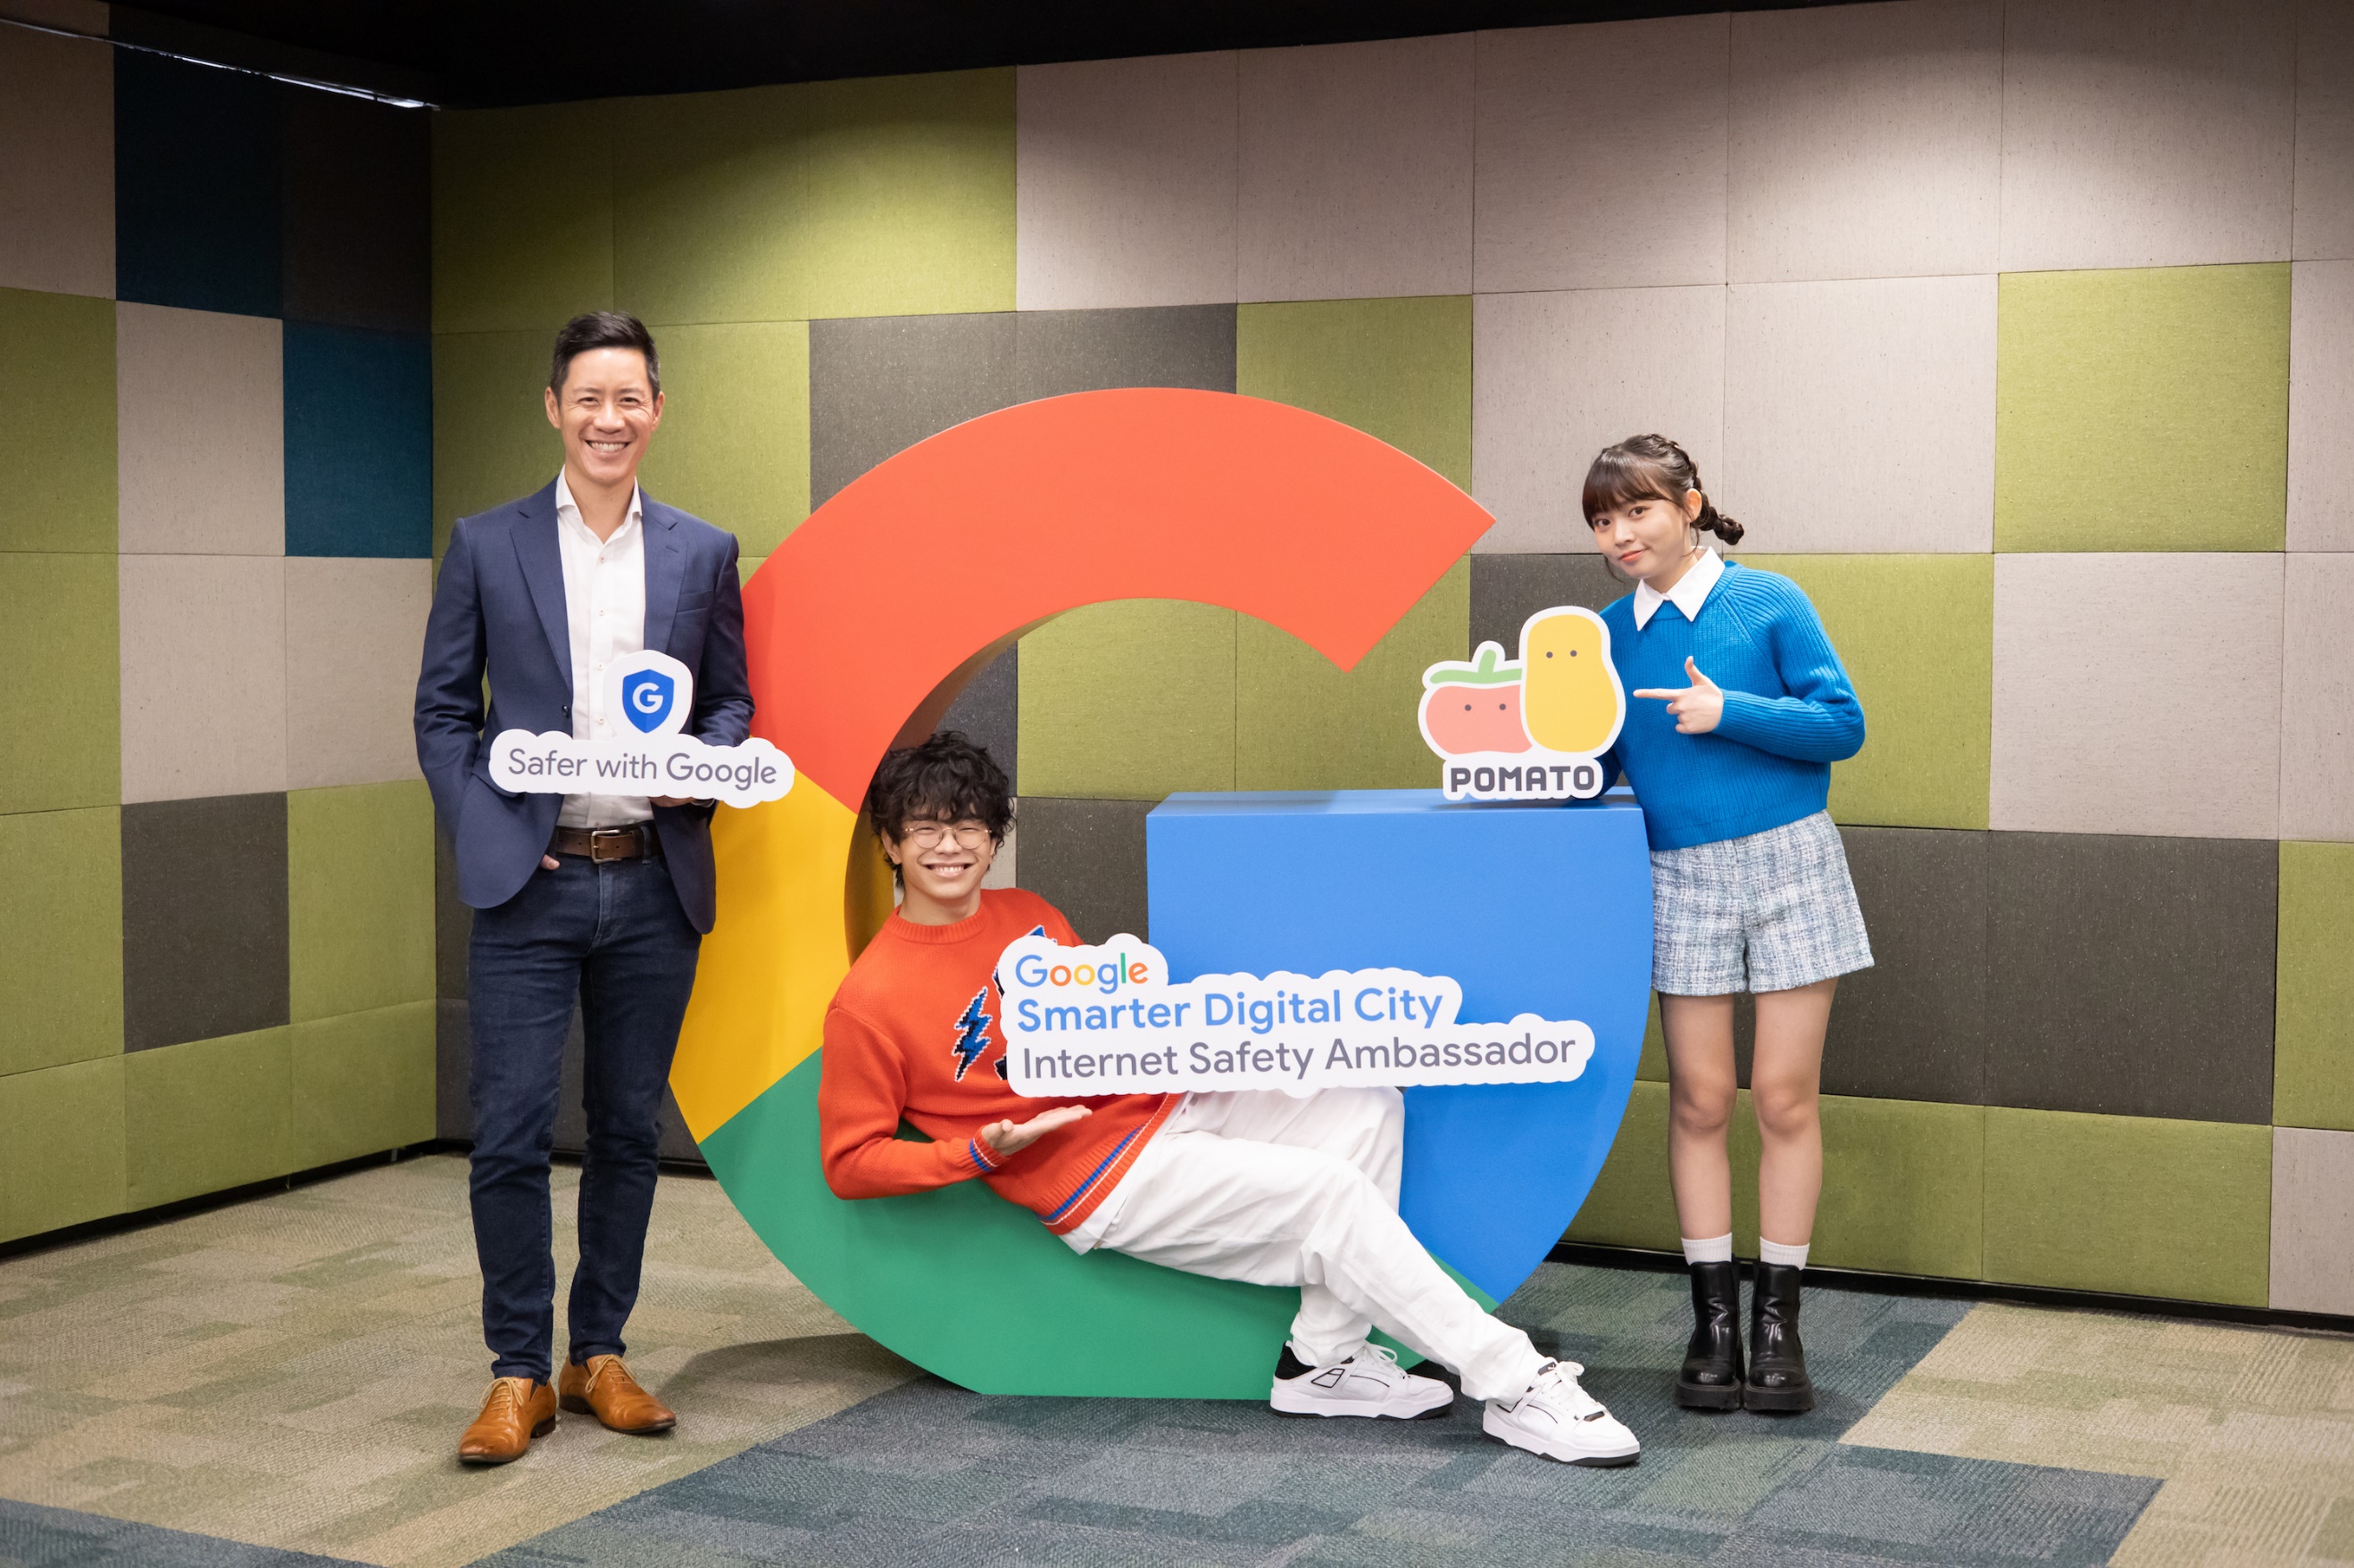 Google 香港銷售及營運總經理余名德（左）與 Google 香港智慧數碼城市網絡安全大使、本地 YouTube 創作團體小薯茄成員程人富（中）及童童（右）攜手推廣網絡安全知識